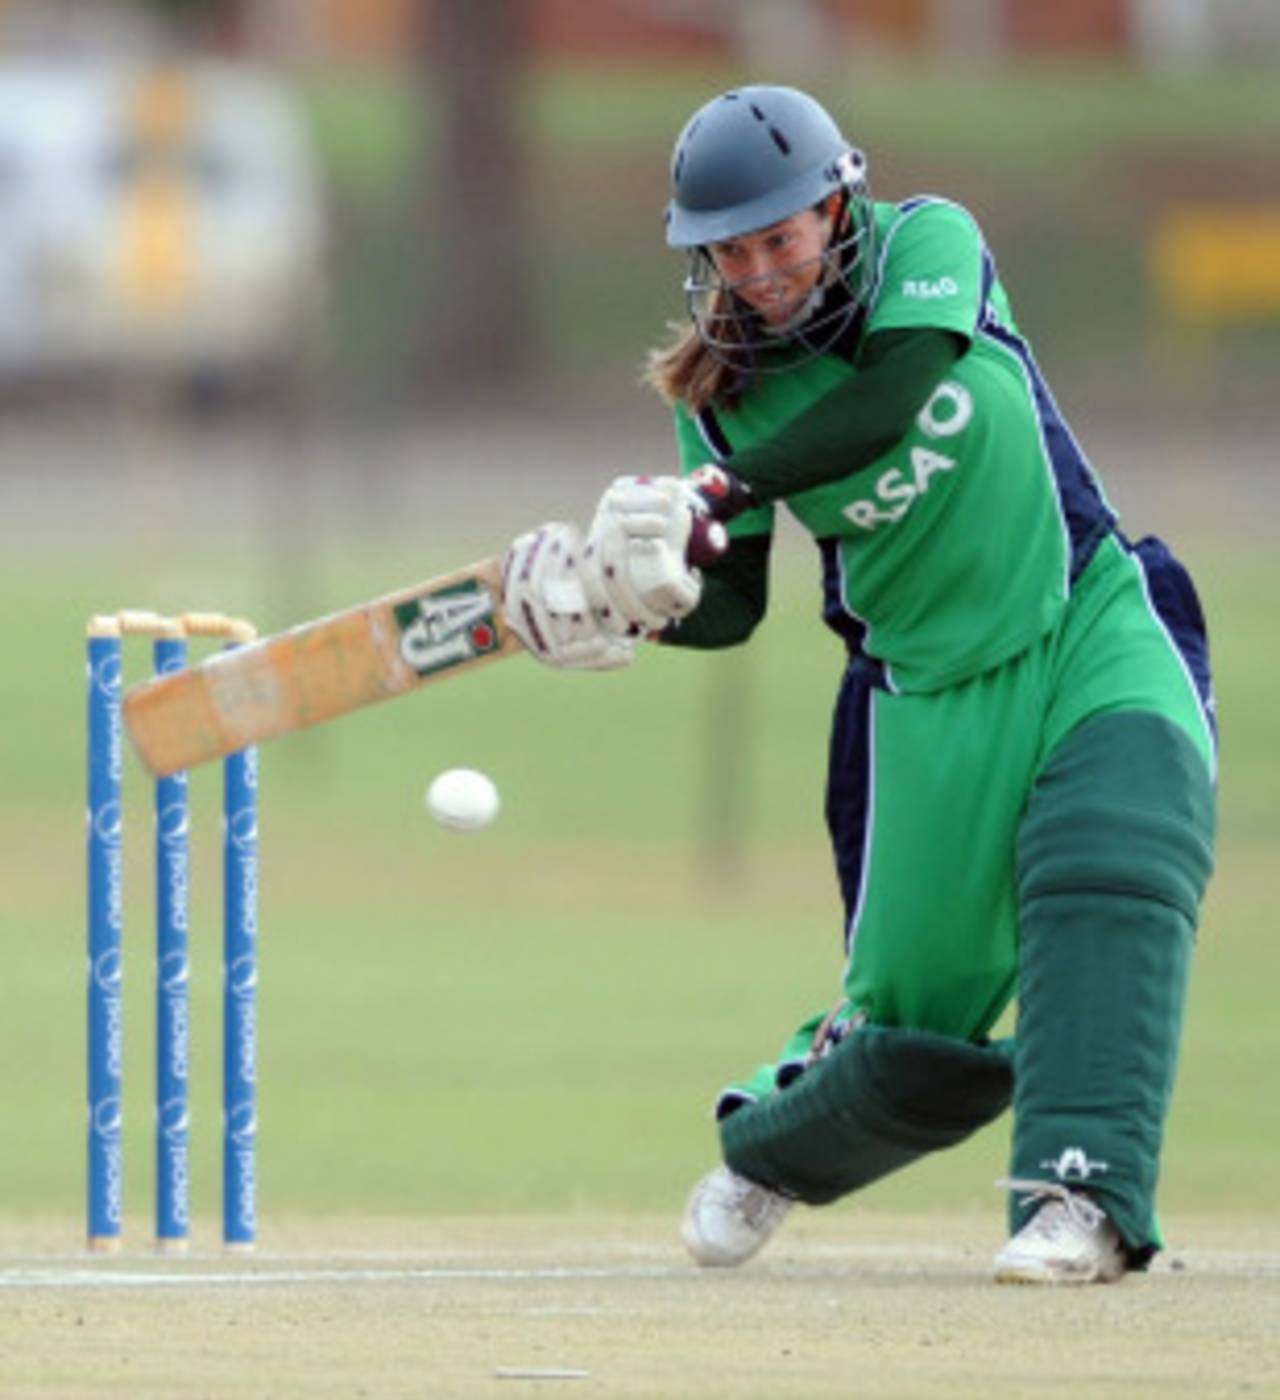 Isobel Joyce got the Ireland innings off to a flying start, Sri Lanka v Ireland, ICC Women's Cricket Twenty20 Challenge, October 14, 2010